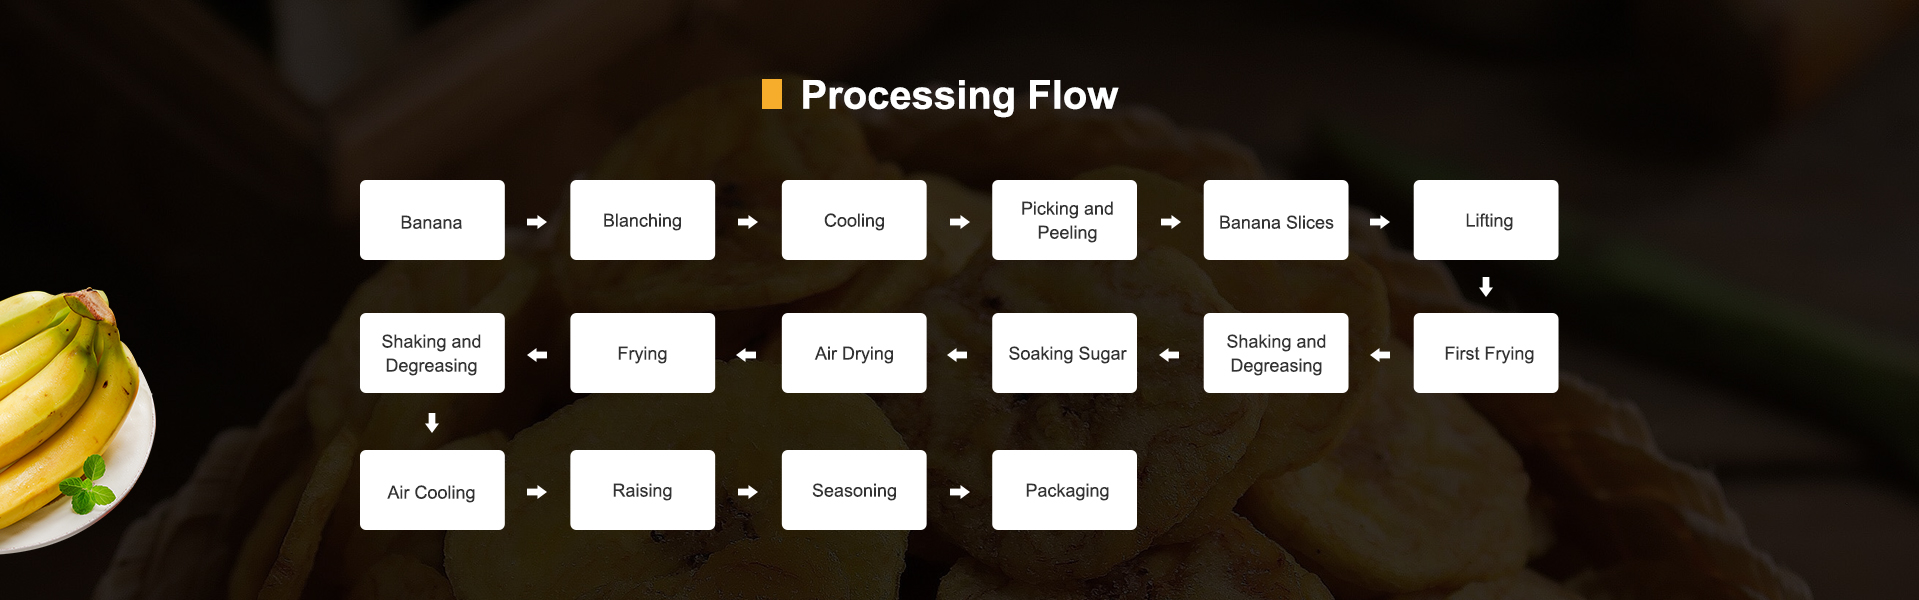 Production flow chart